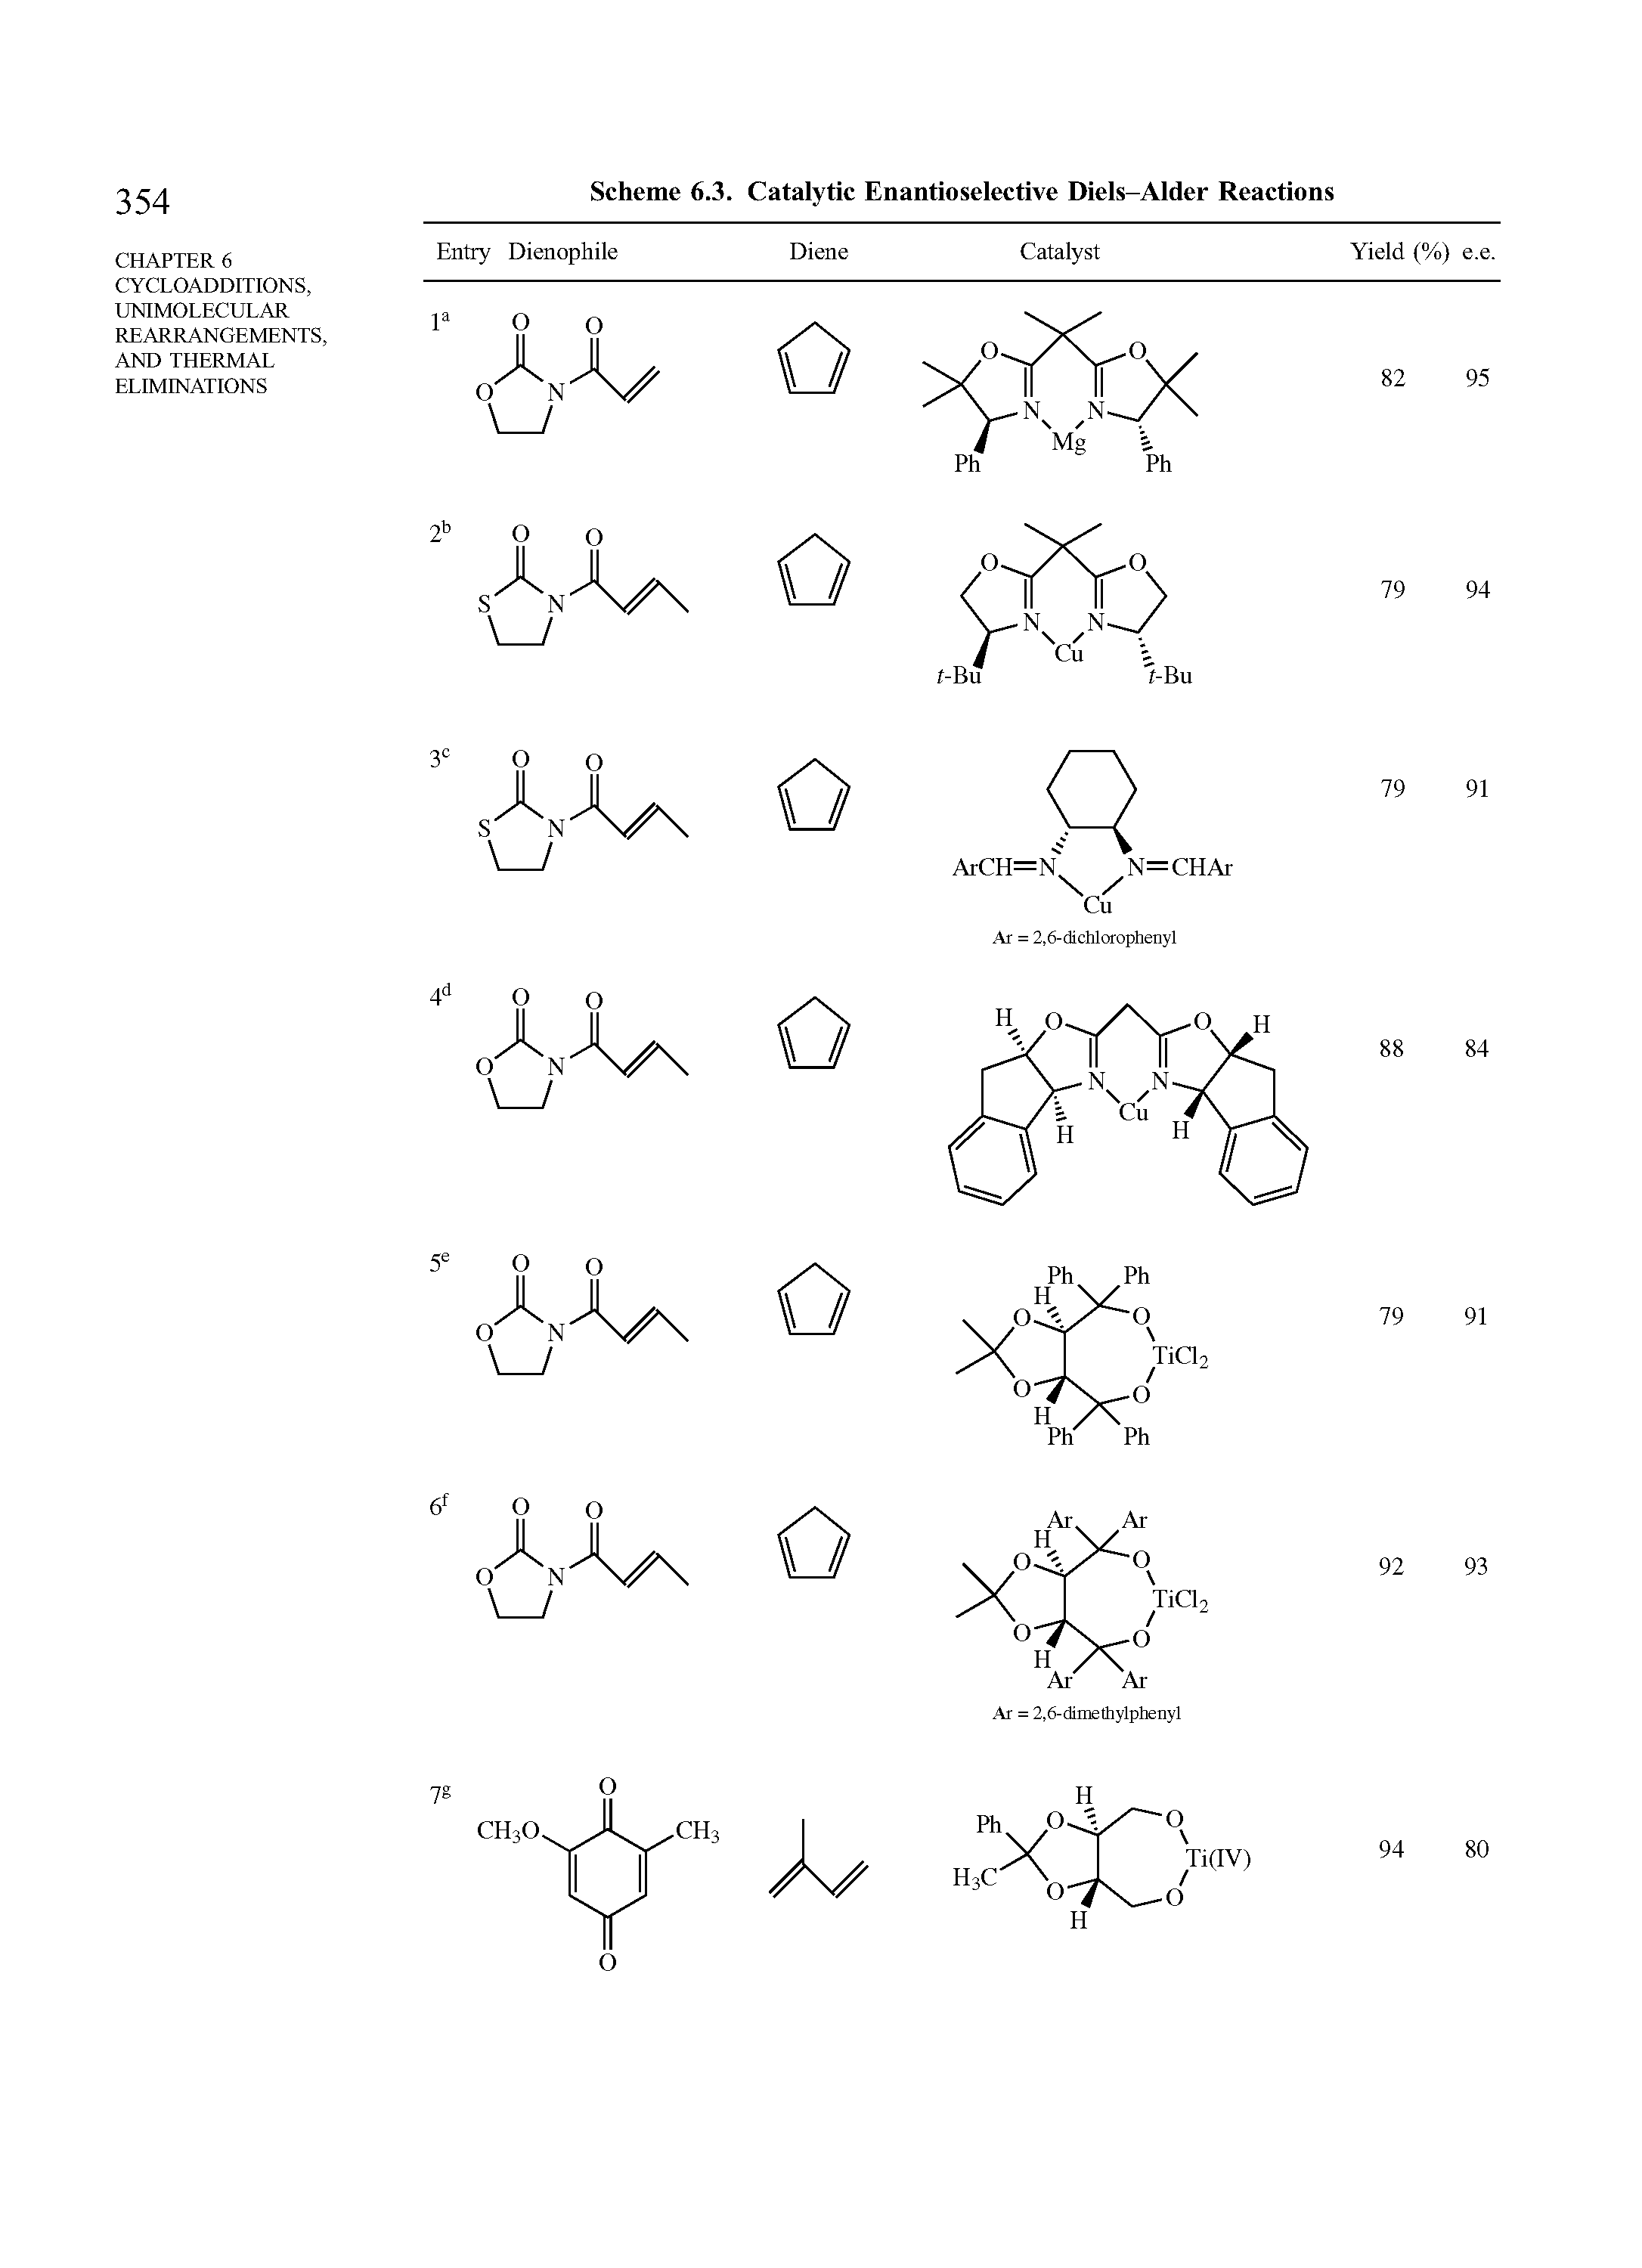 Scheme 6.3. Catalytic Enantioselective Diels-Alder Reactions...